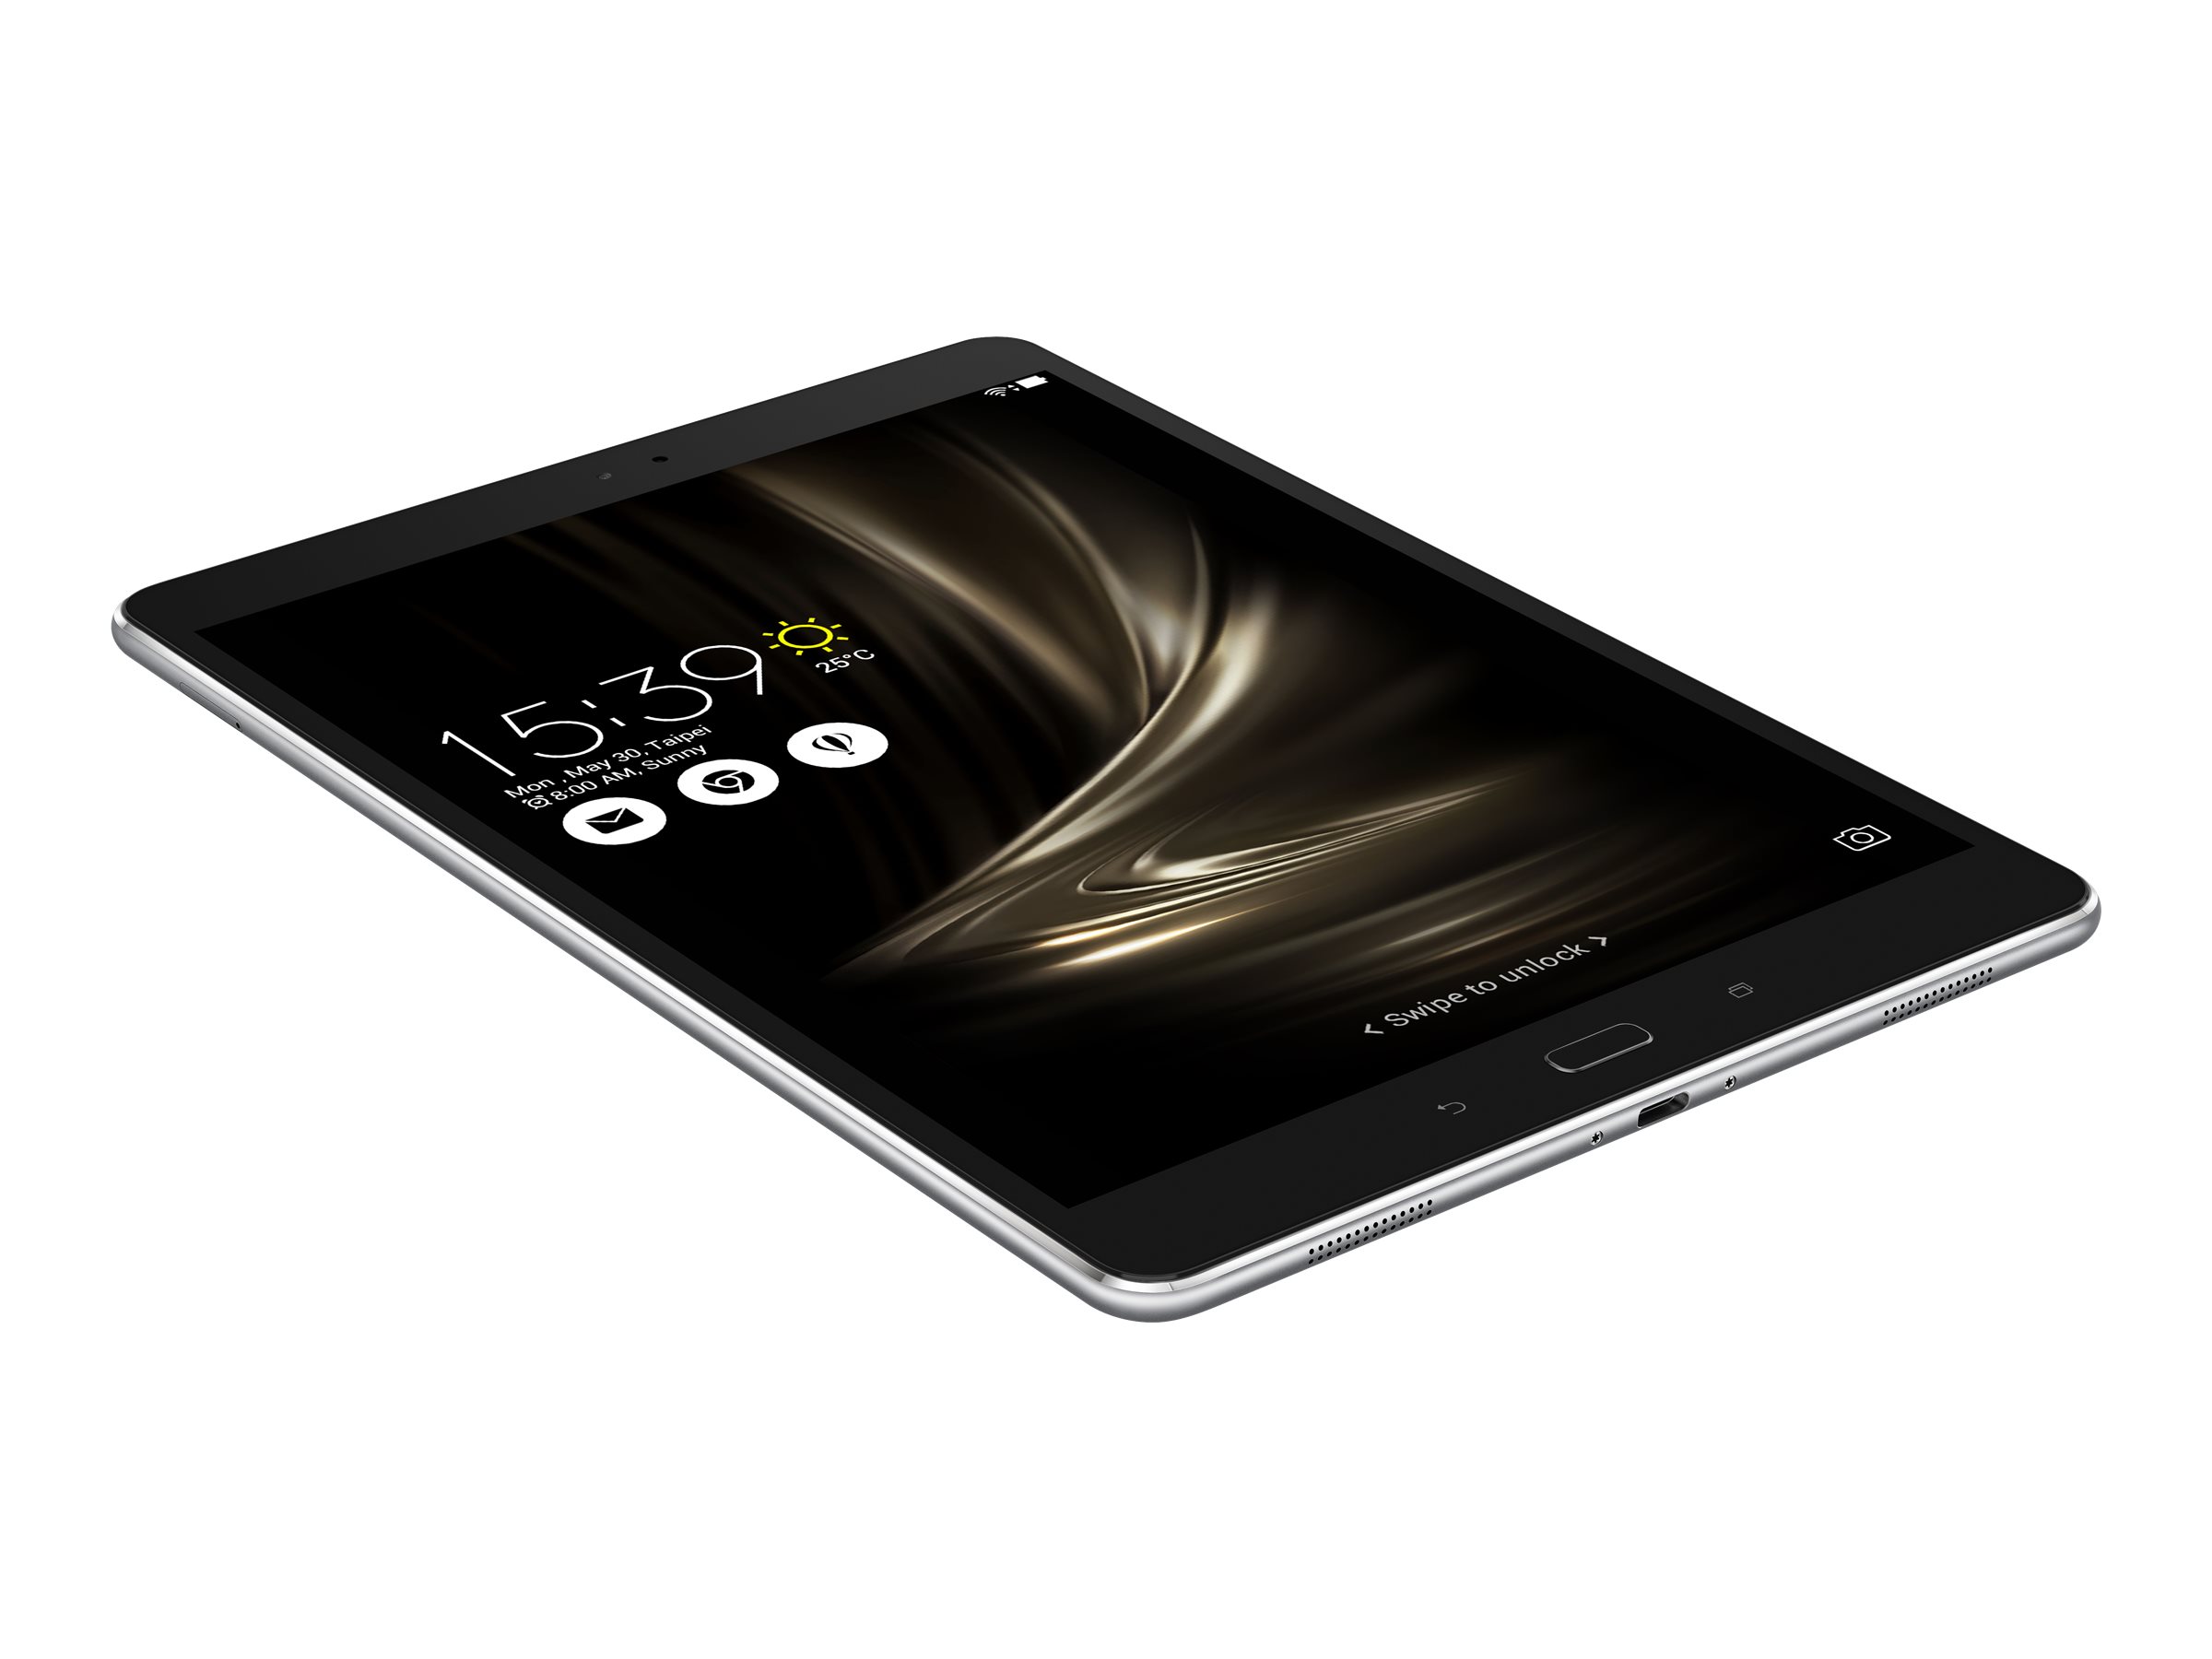 ASUS ZenPad 3S 10 Z500M - Tablet - Android 6.0 (Marshmallow) - 64 GB eMMC - 9.7" IPS (2048 x 1536) - microSD slot - titanium gray - image 4 of 16